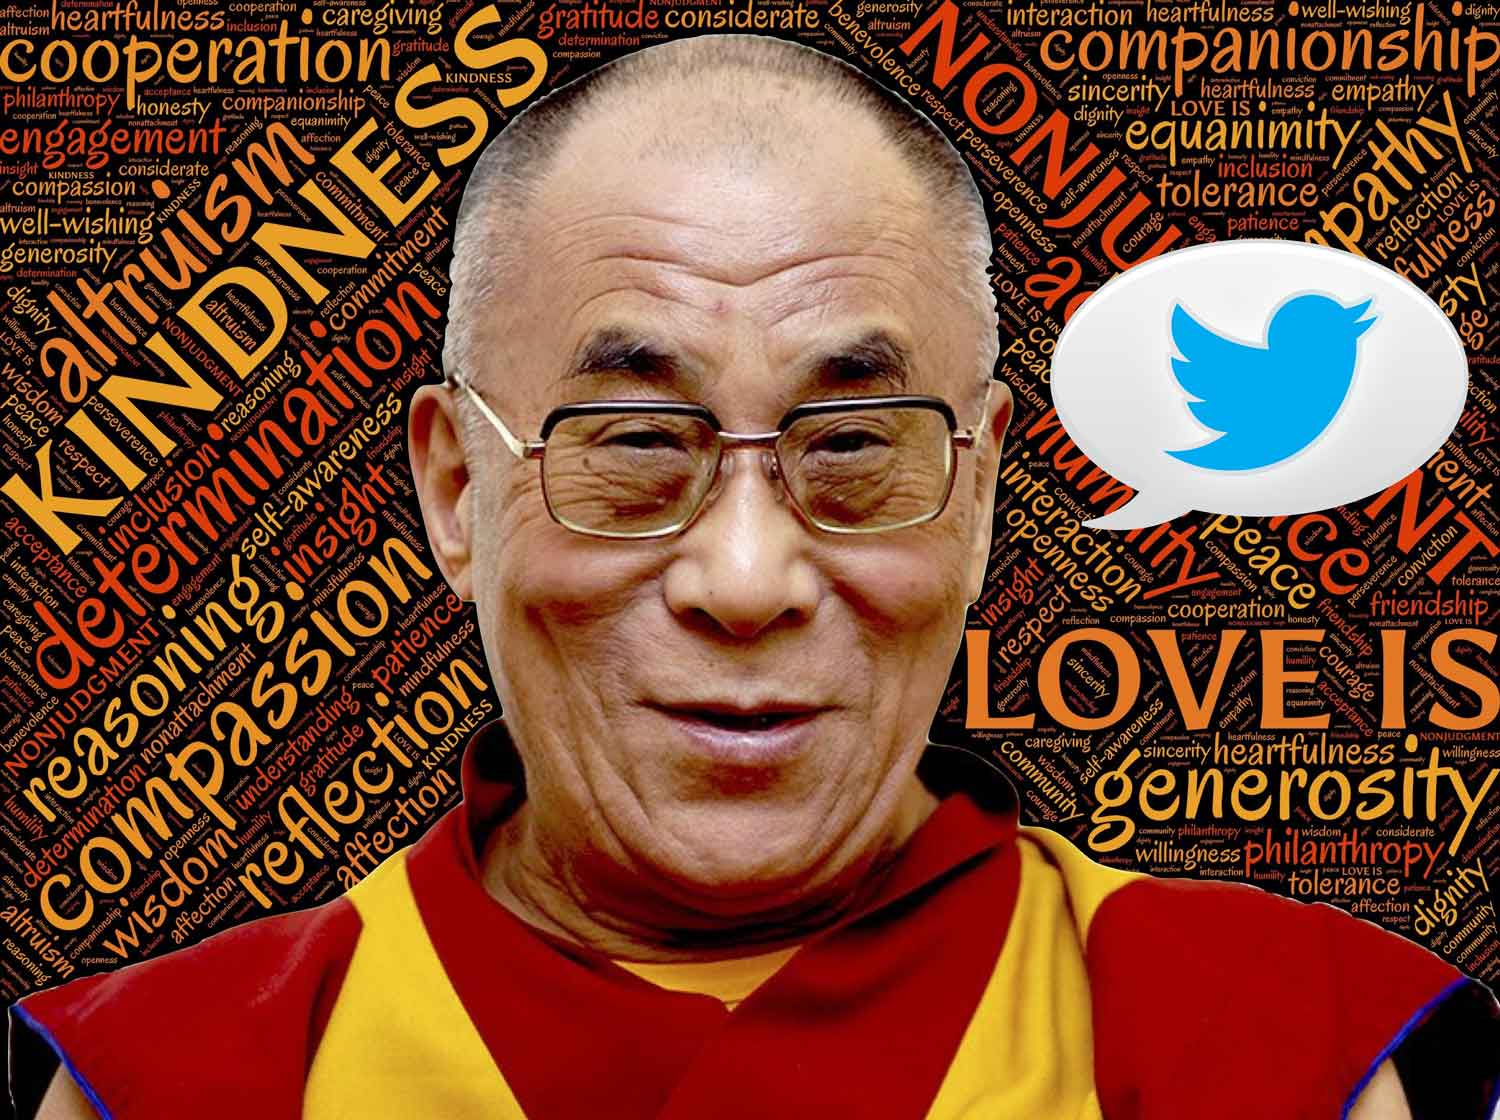 Dalai Lama Twitter Account Tweets Spiritual Wisdom 140 Characters At A Time (2010)